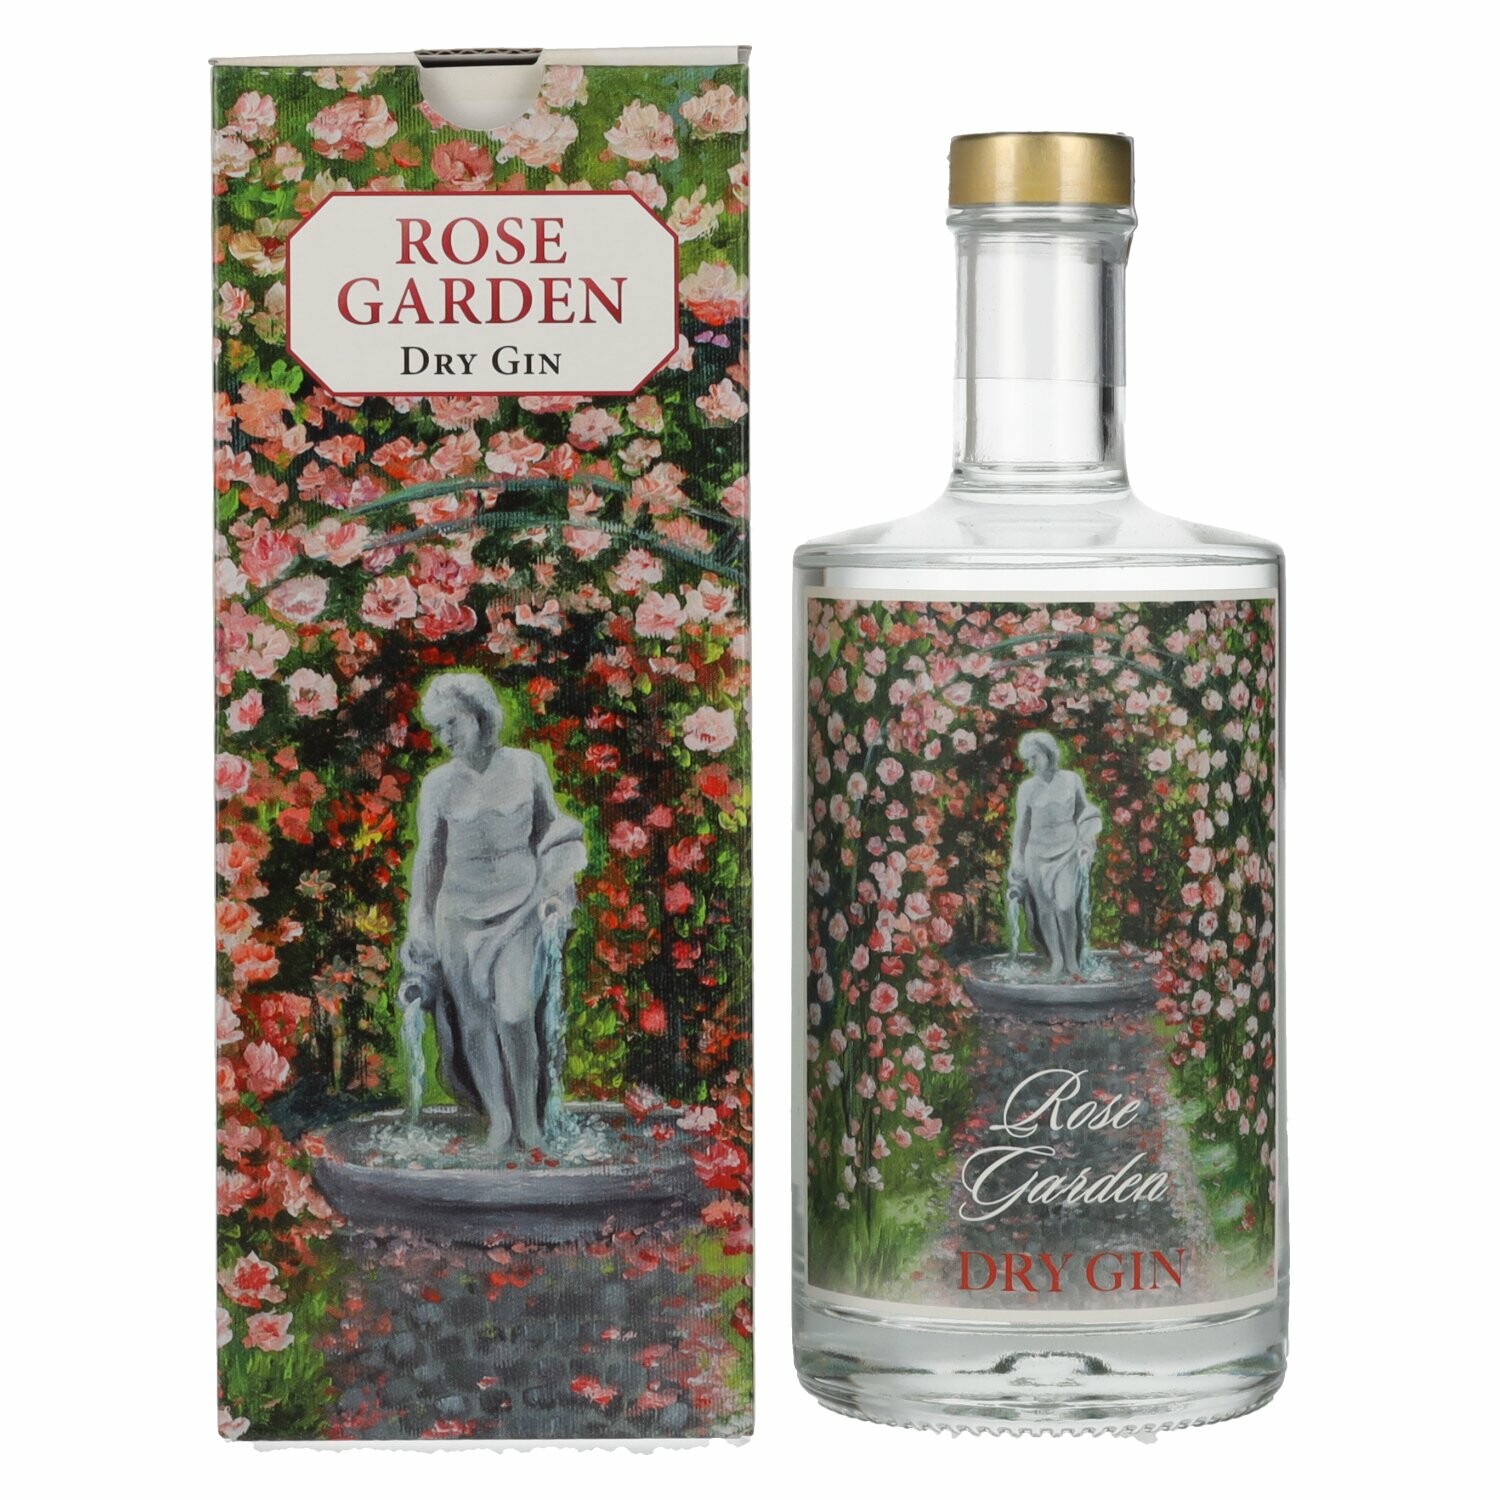 Rose Garden Dry Gin 44% Vol. 0,5l in Giftbox